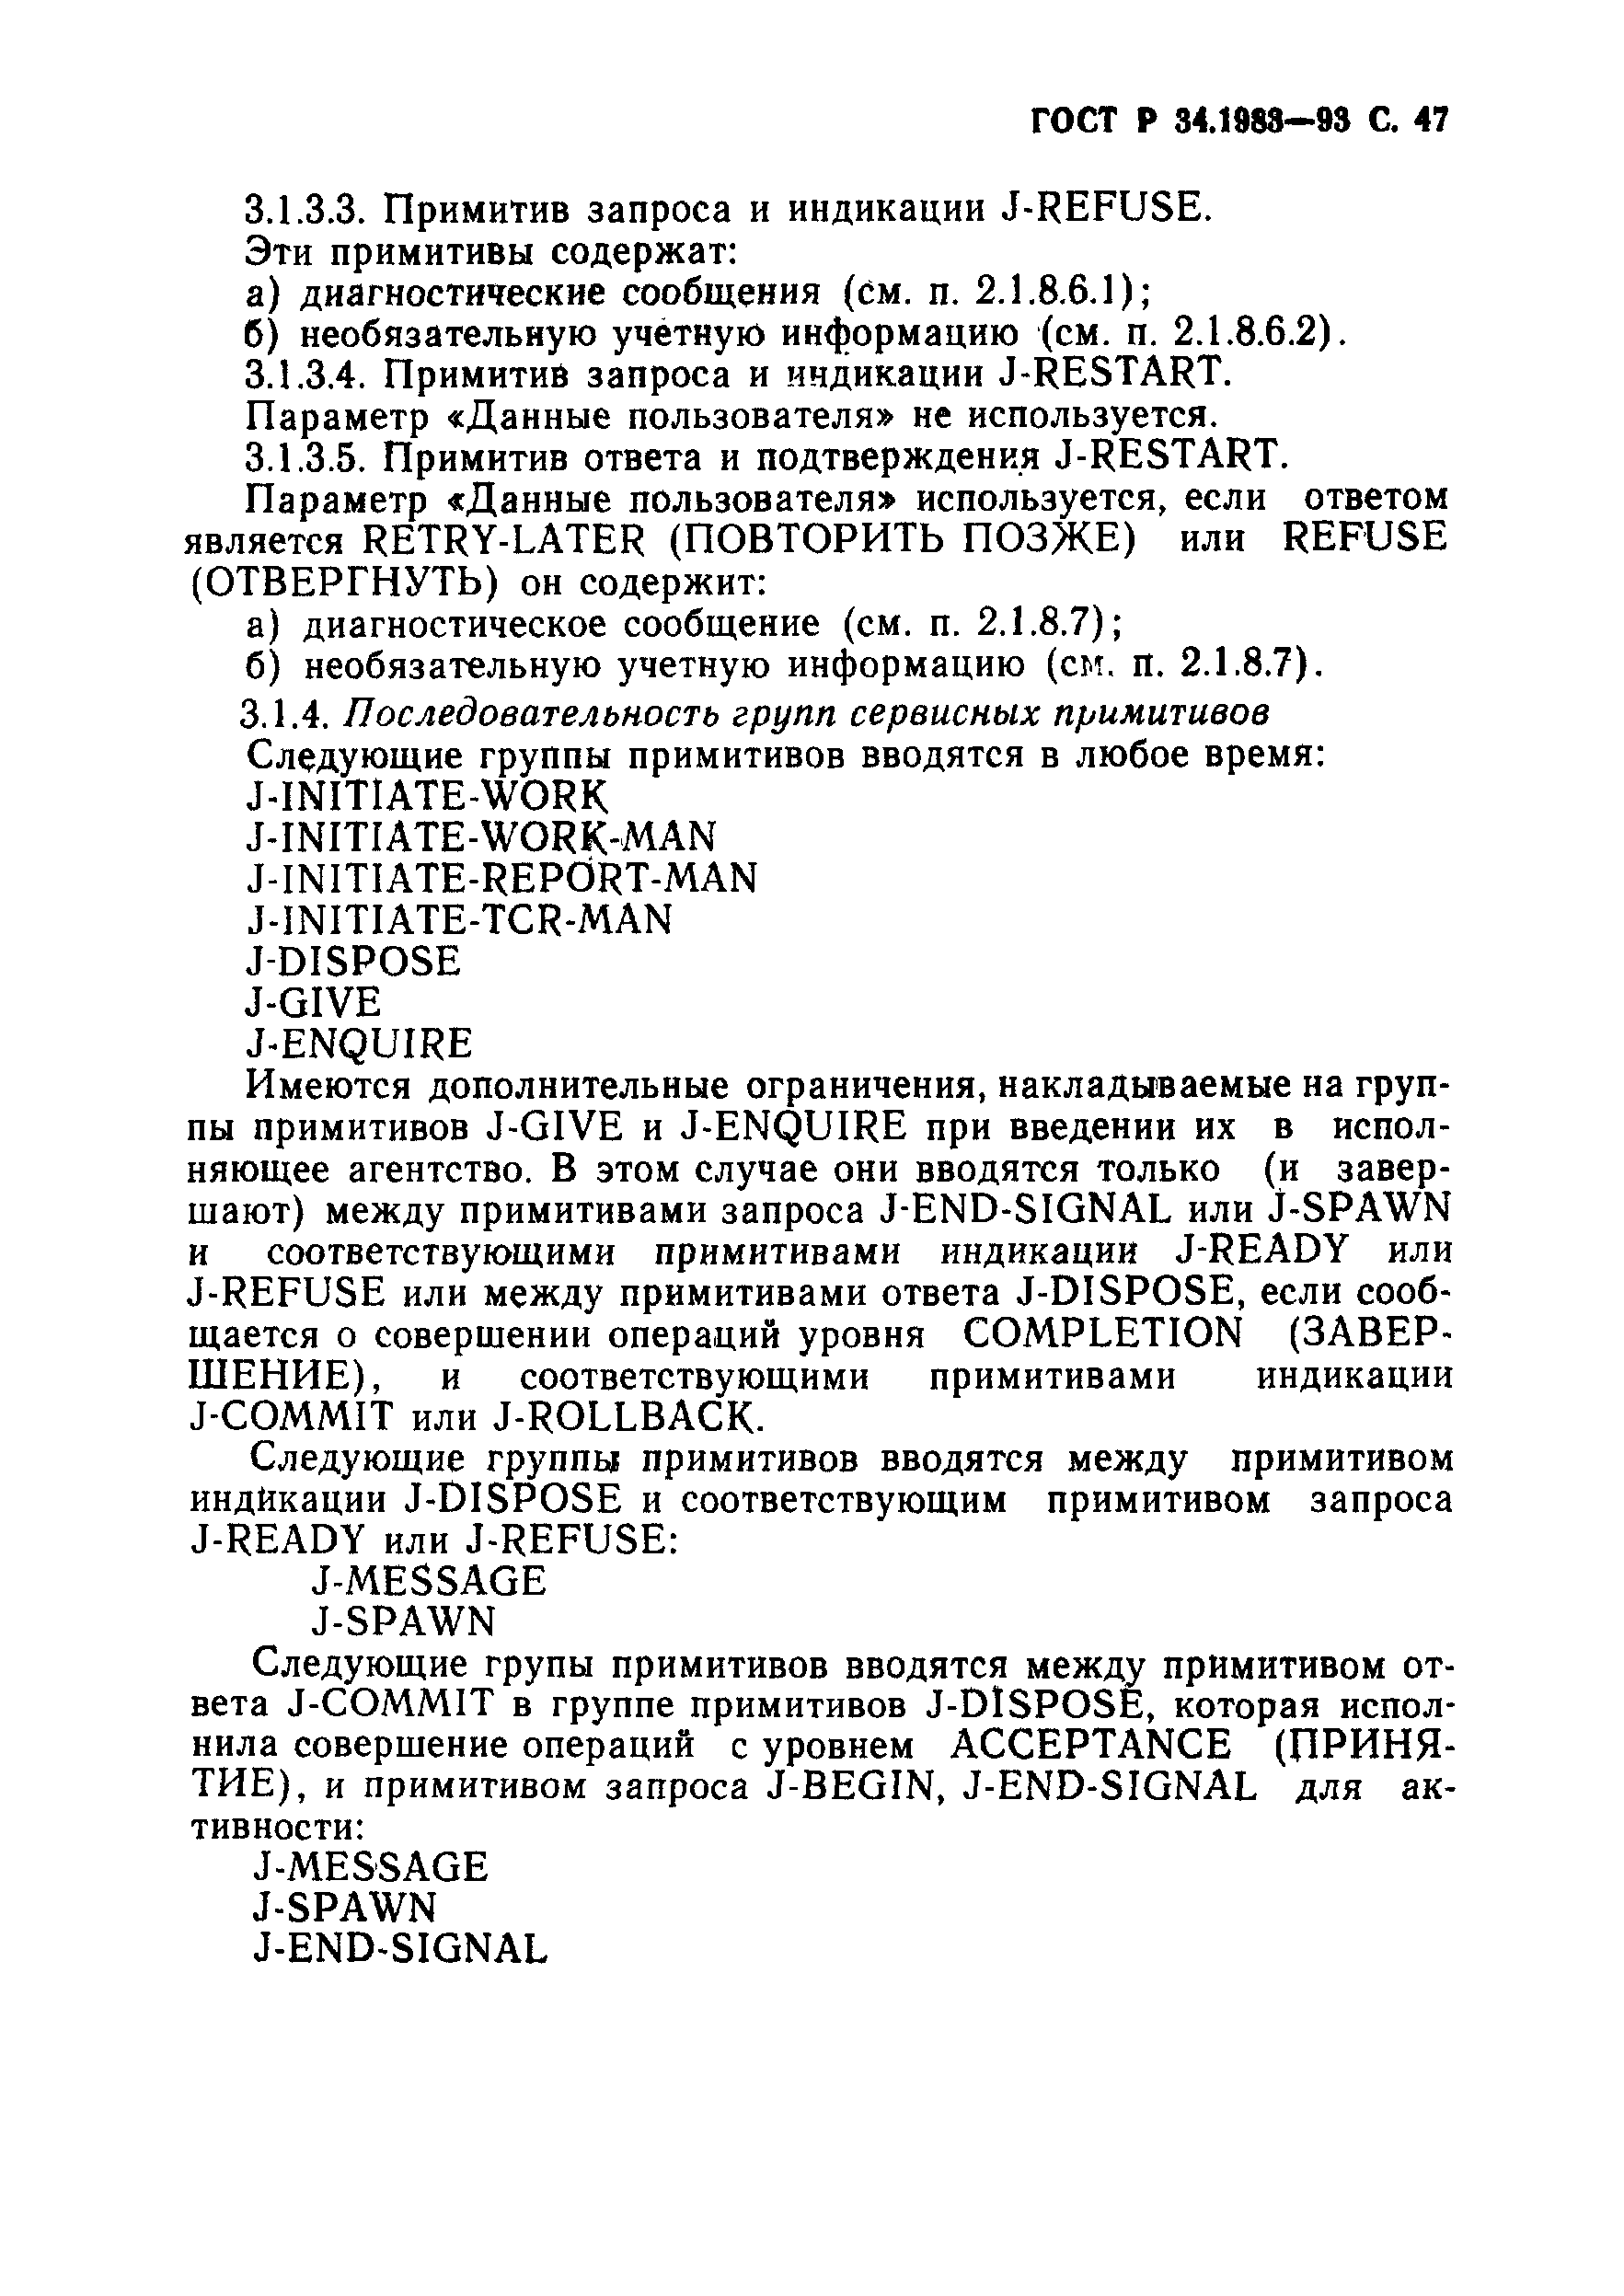 ГОСТ Р 34.1983-93. Страница 48